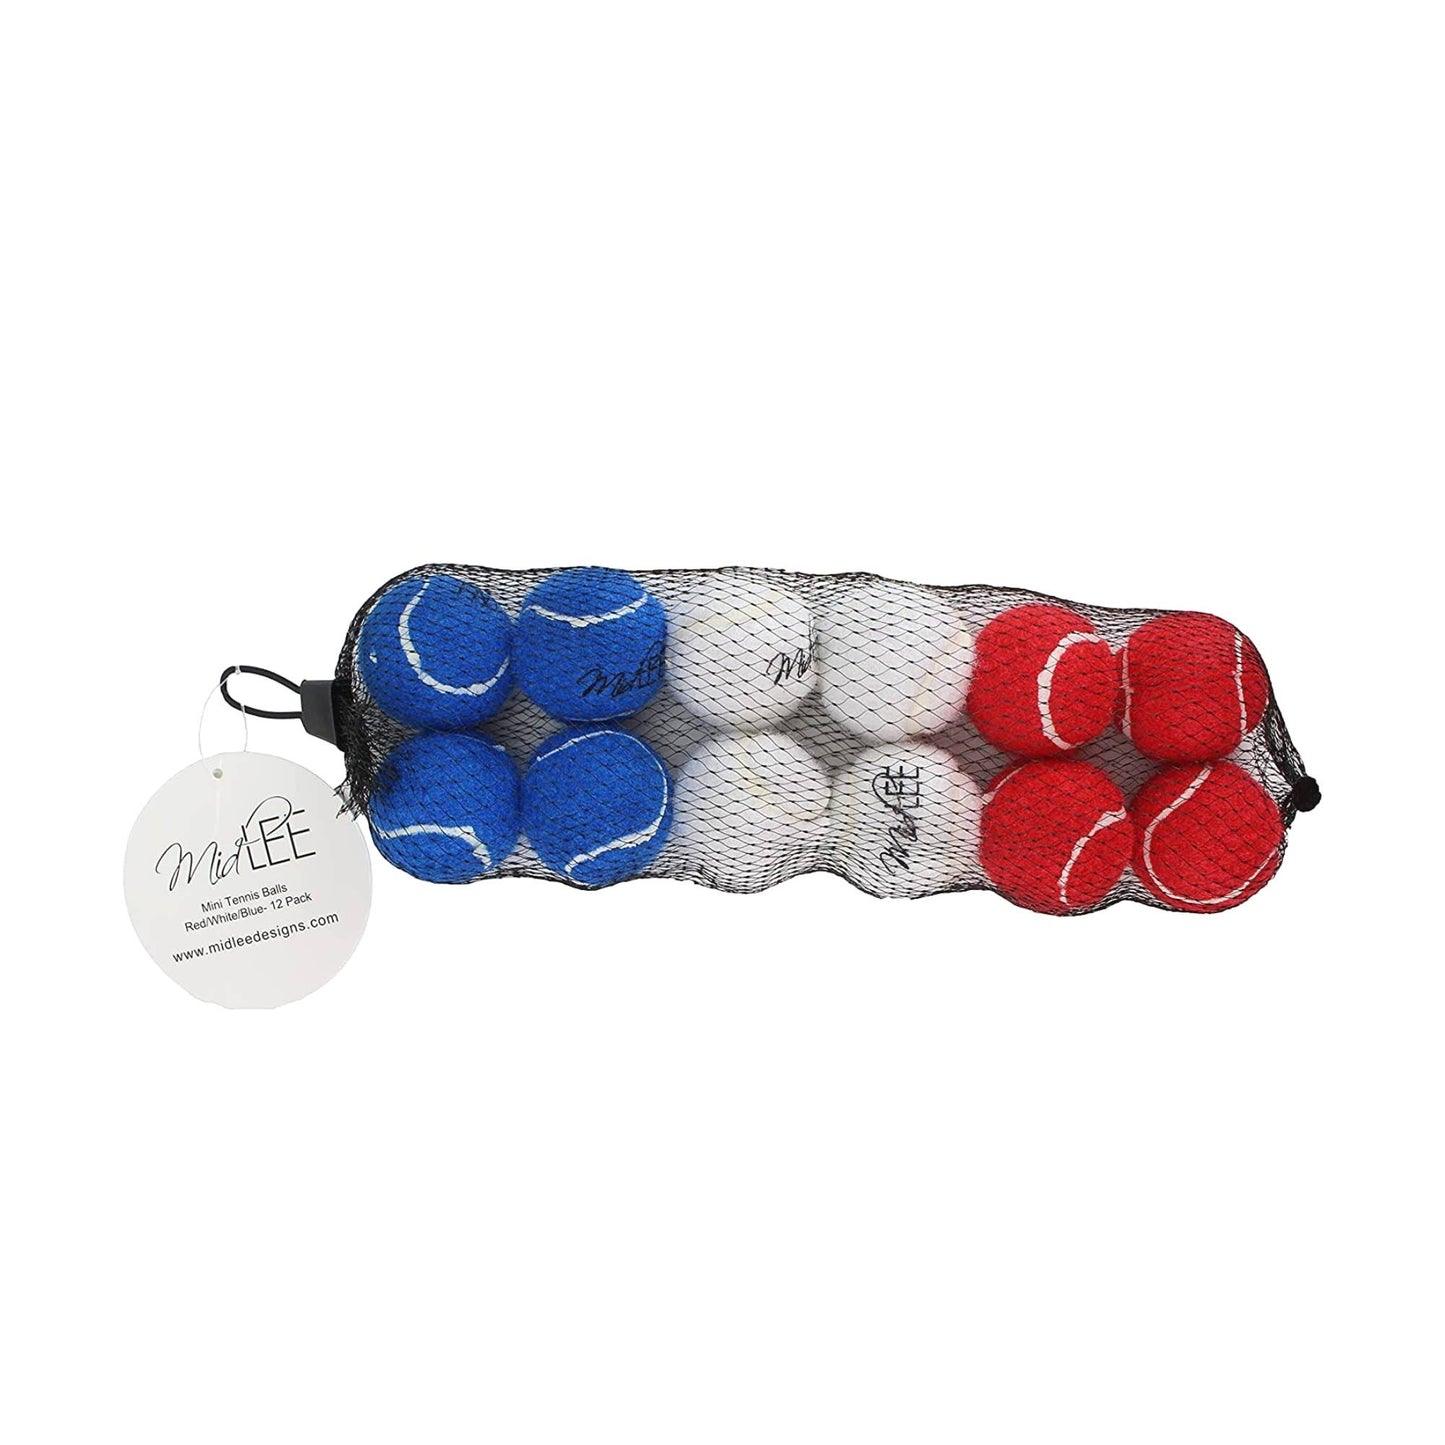 USA Red White Blue Mini Tennis Ball